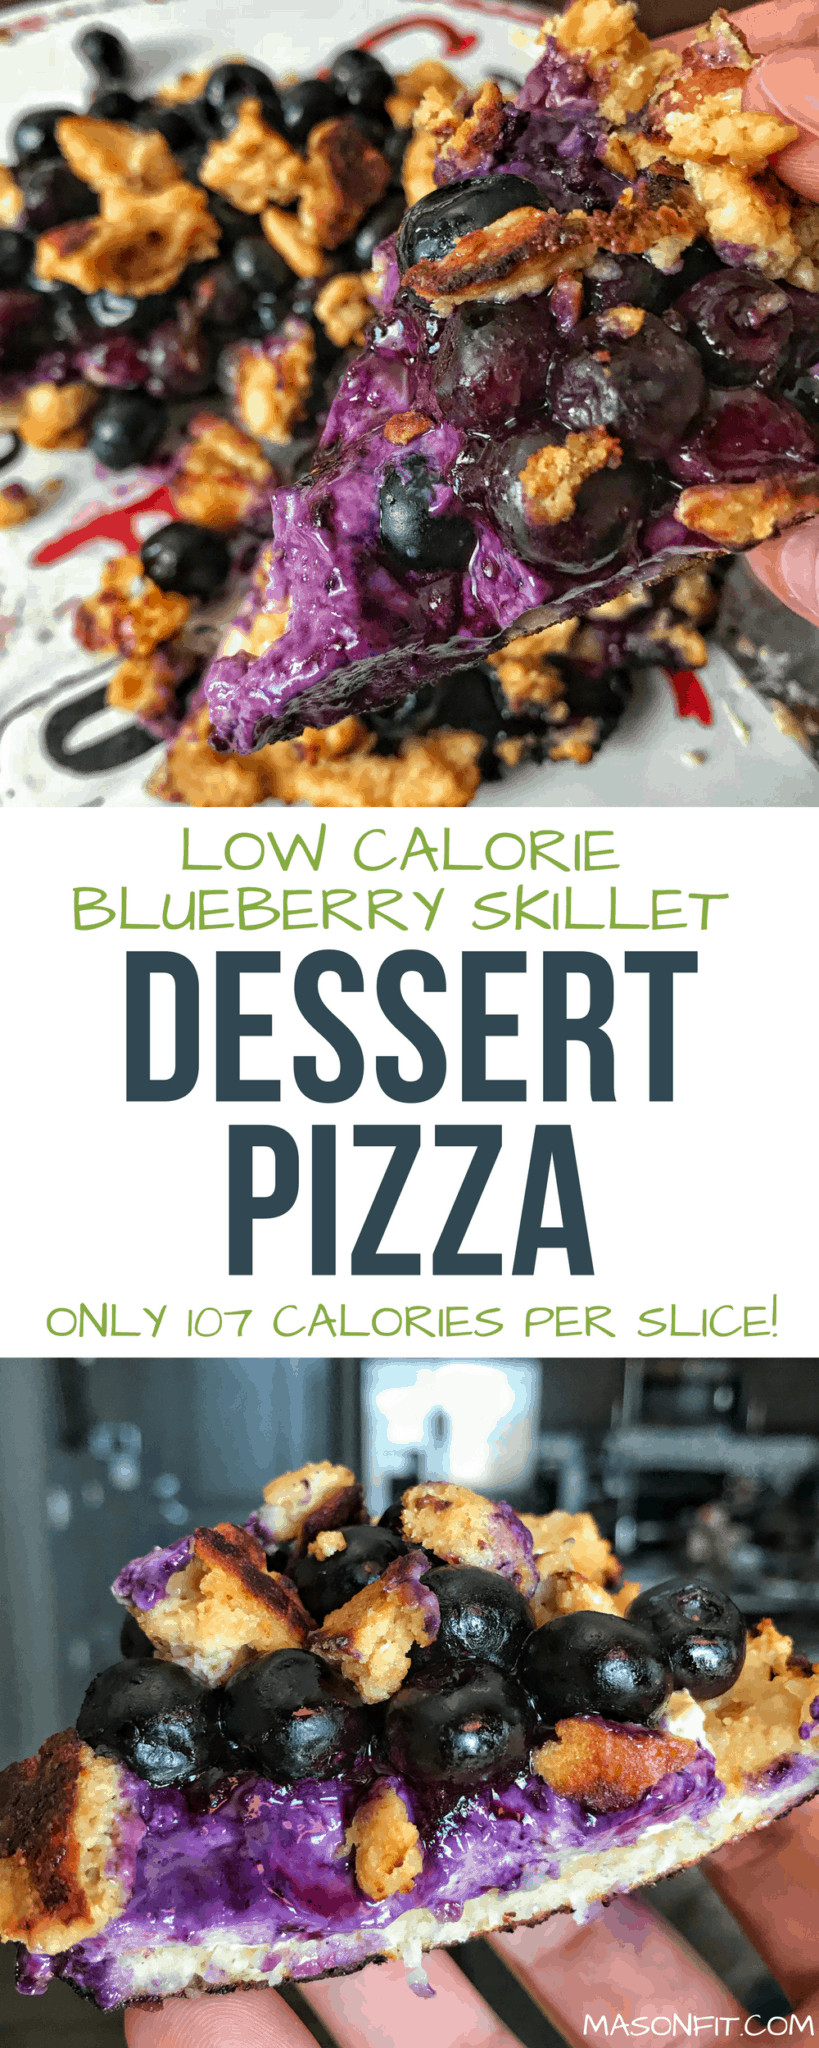 Low Calorie Blueberry Desserts
 Low Calorie Blueberry Dessert Skillet Pizza Recipe